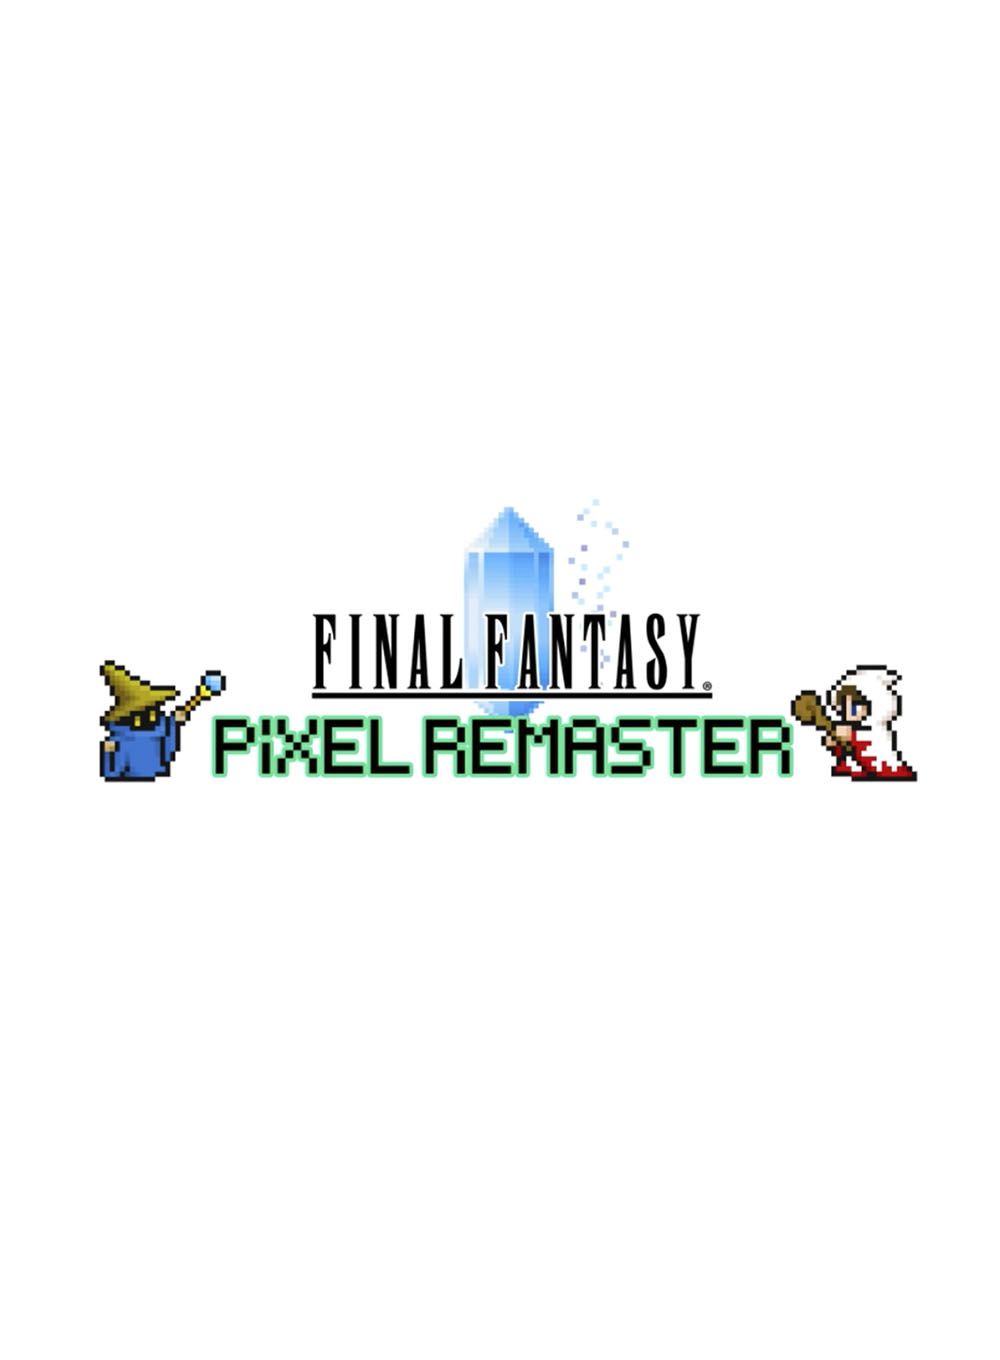 download ff6 pixel remaster guide